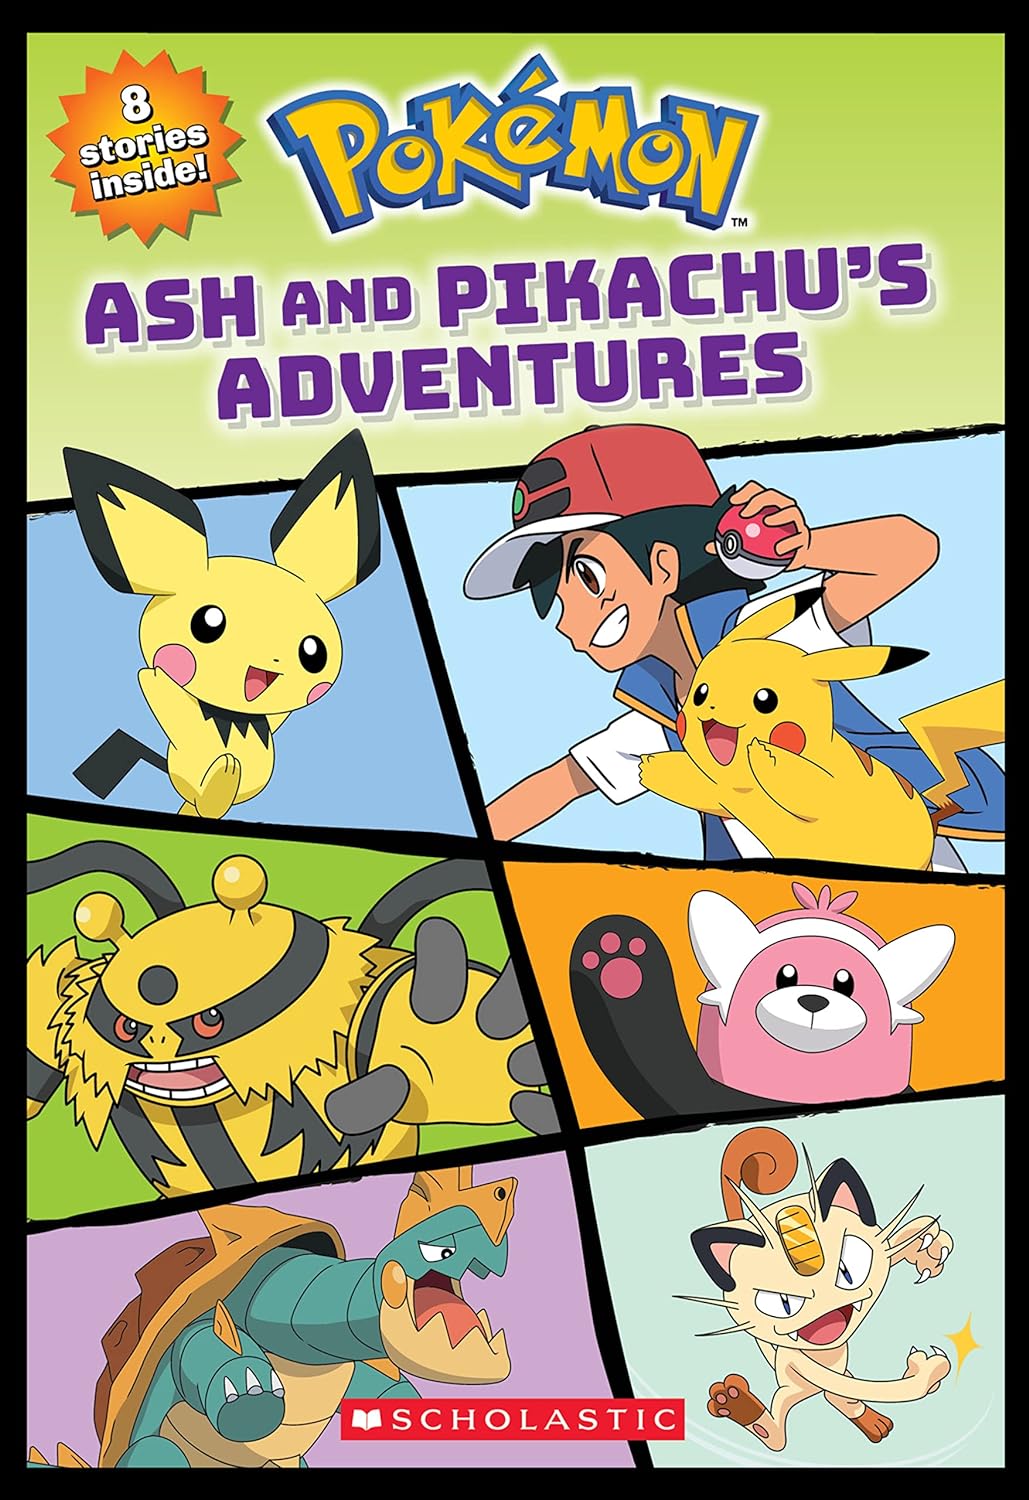 Pokemon: Ash &amp; Pikachu’s Adventures, 8 Stories inside